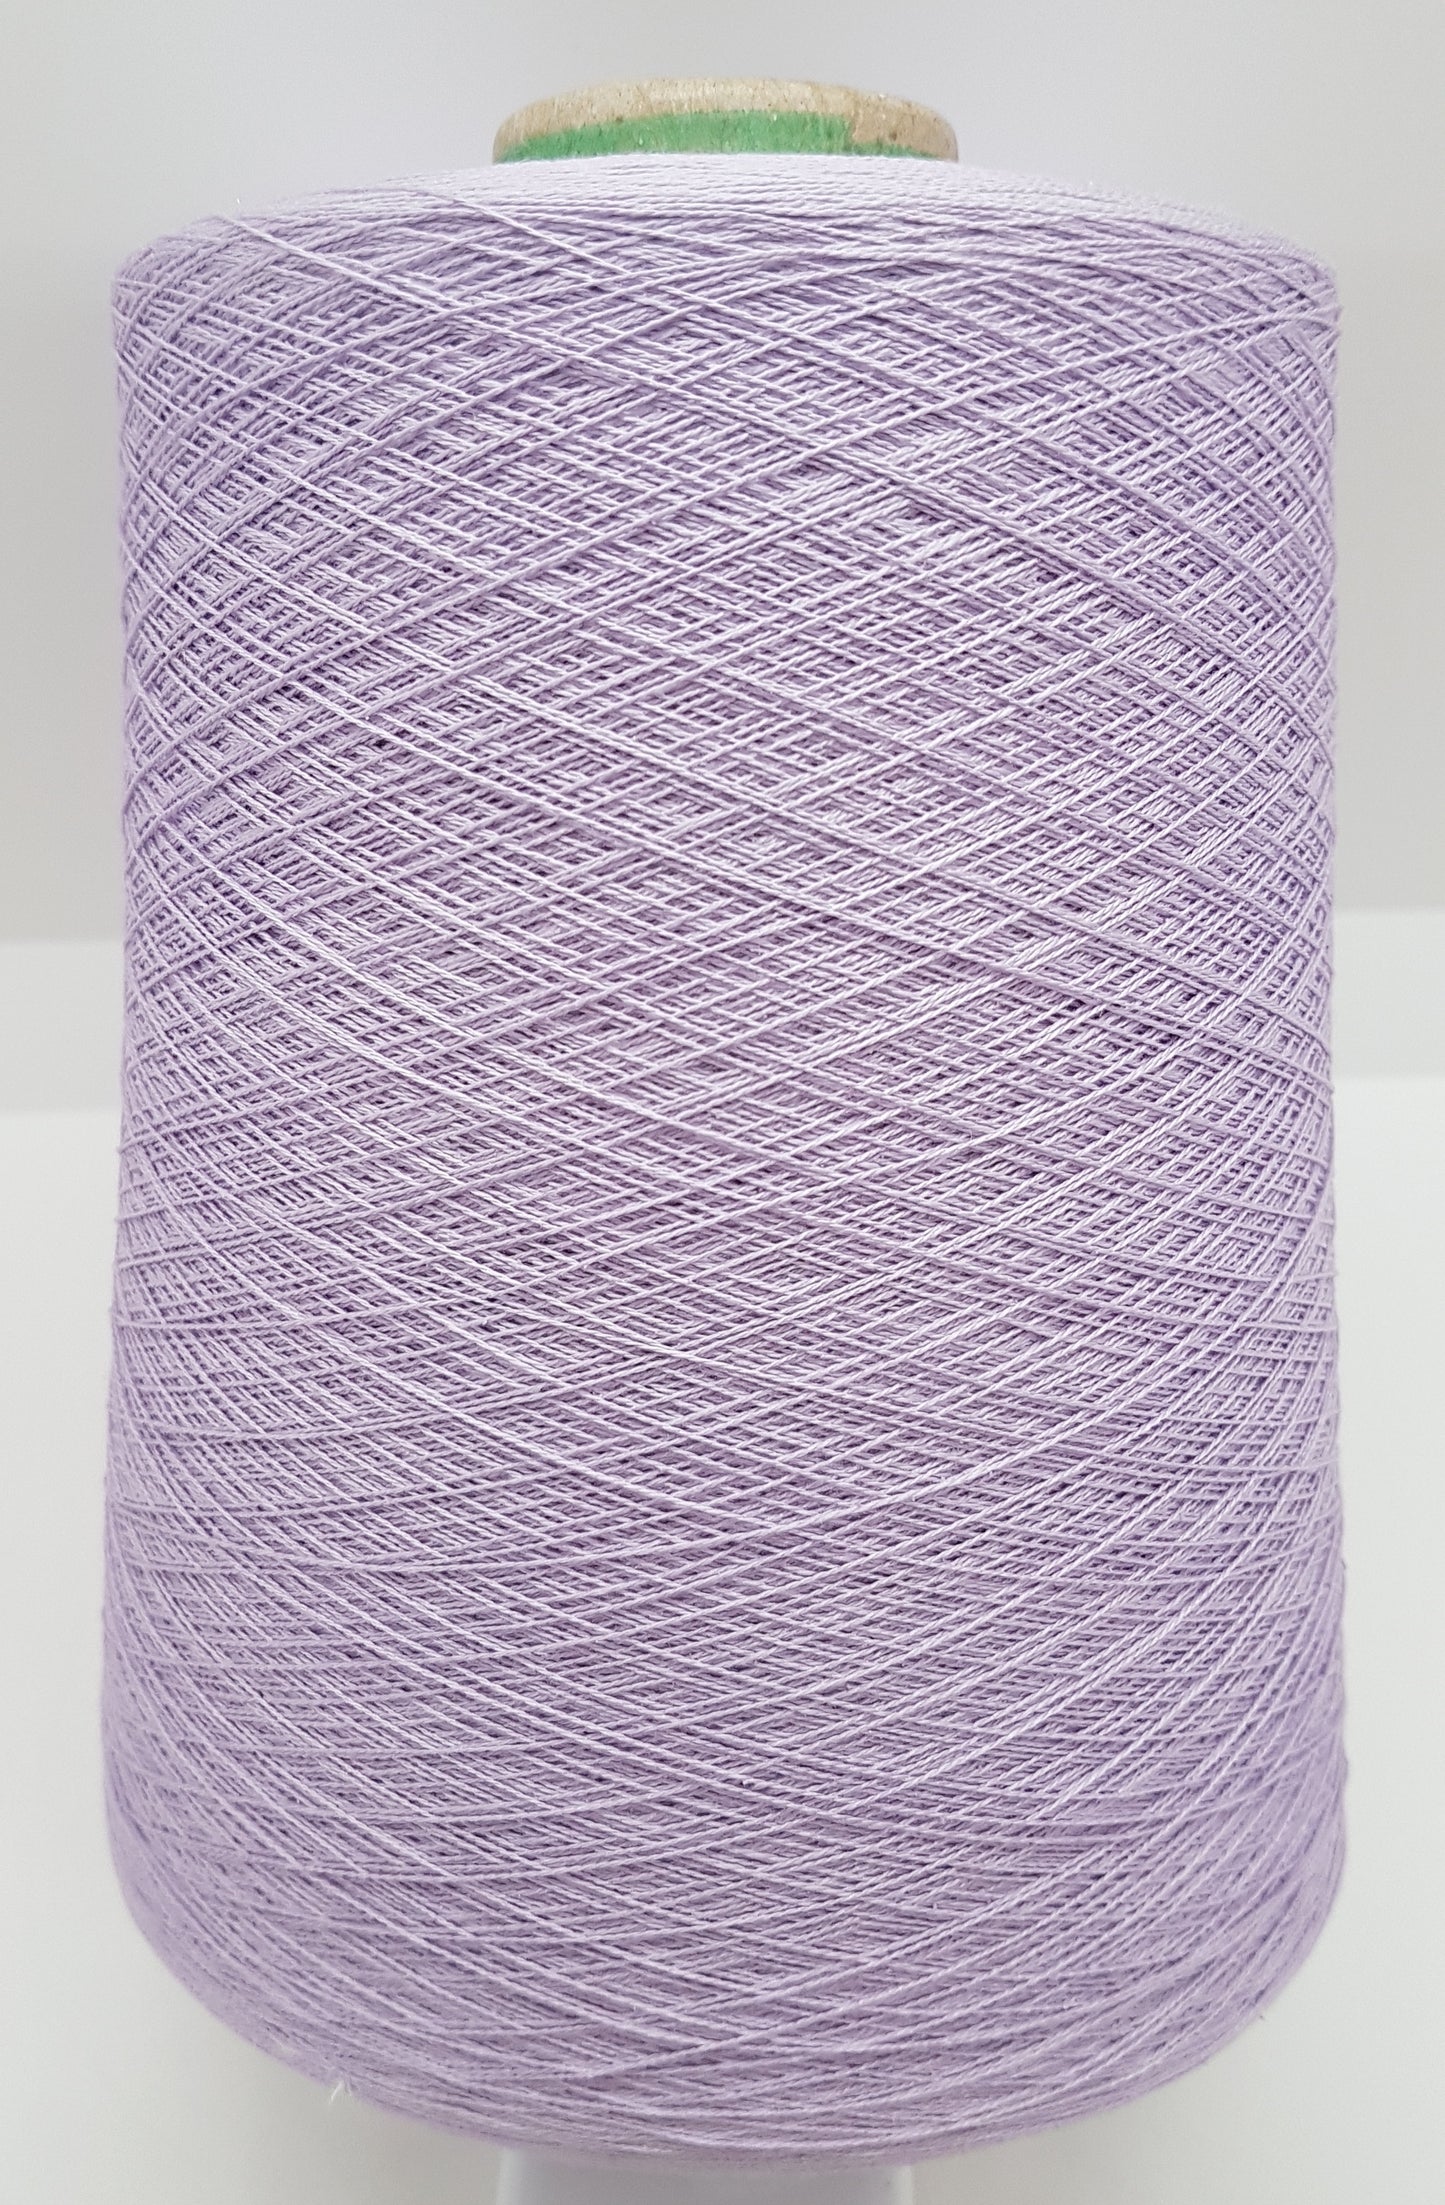 300g-430g Seta Mulberry cotton Italian yarn color lavender color N.335